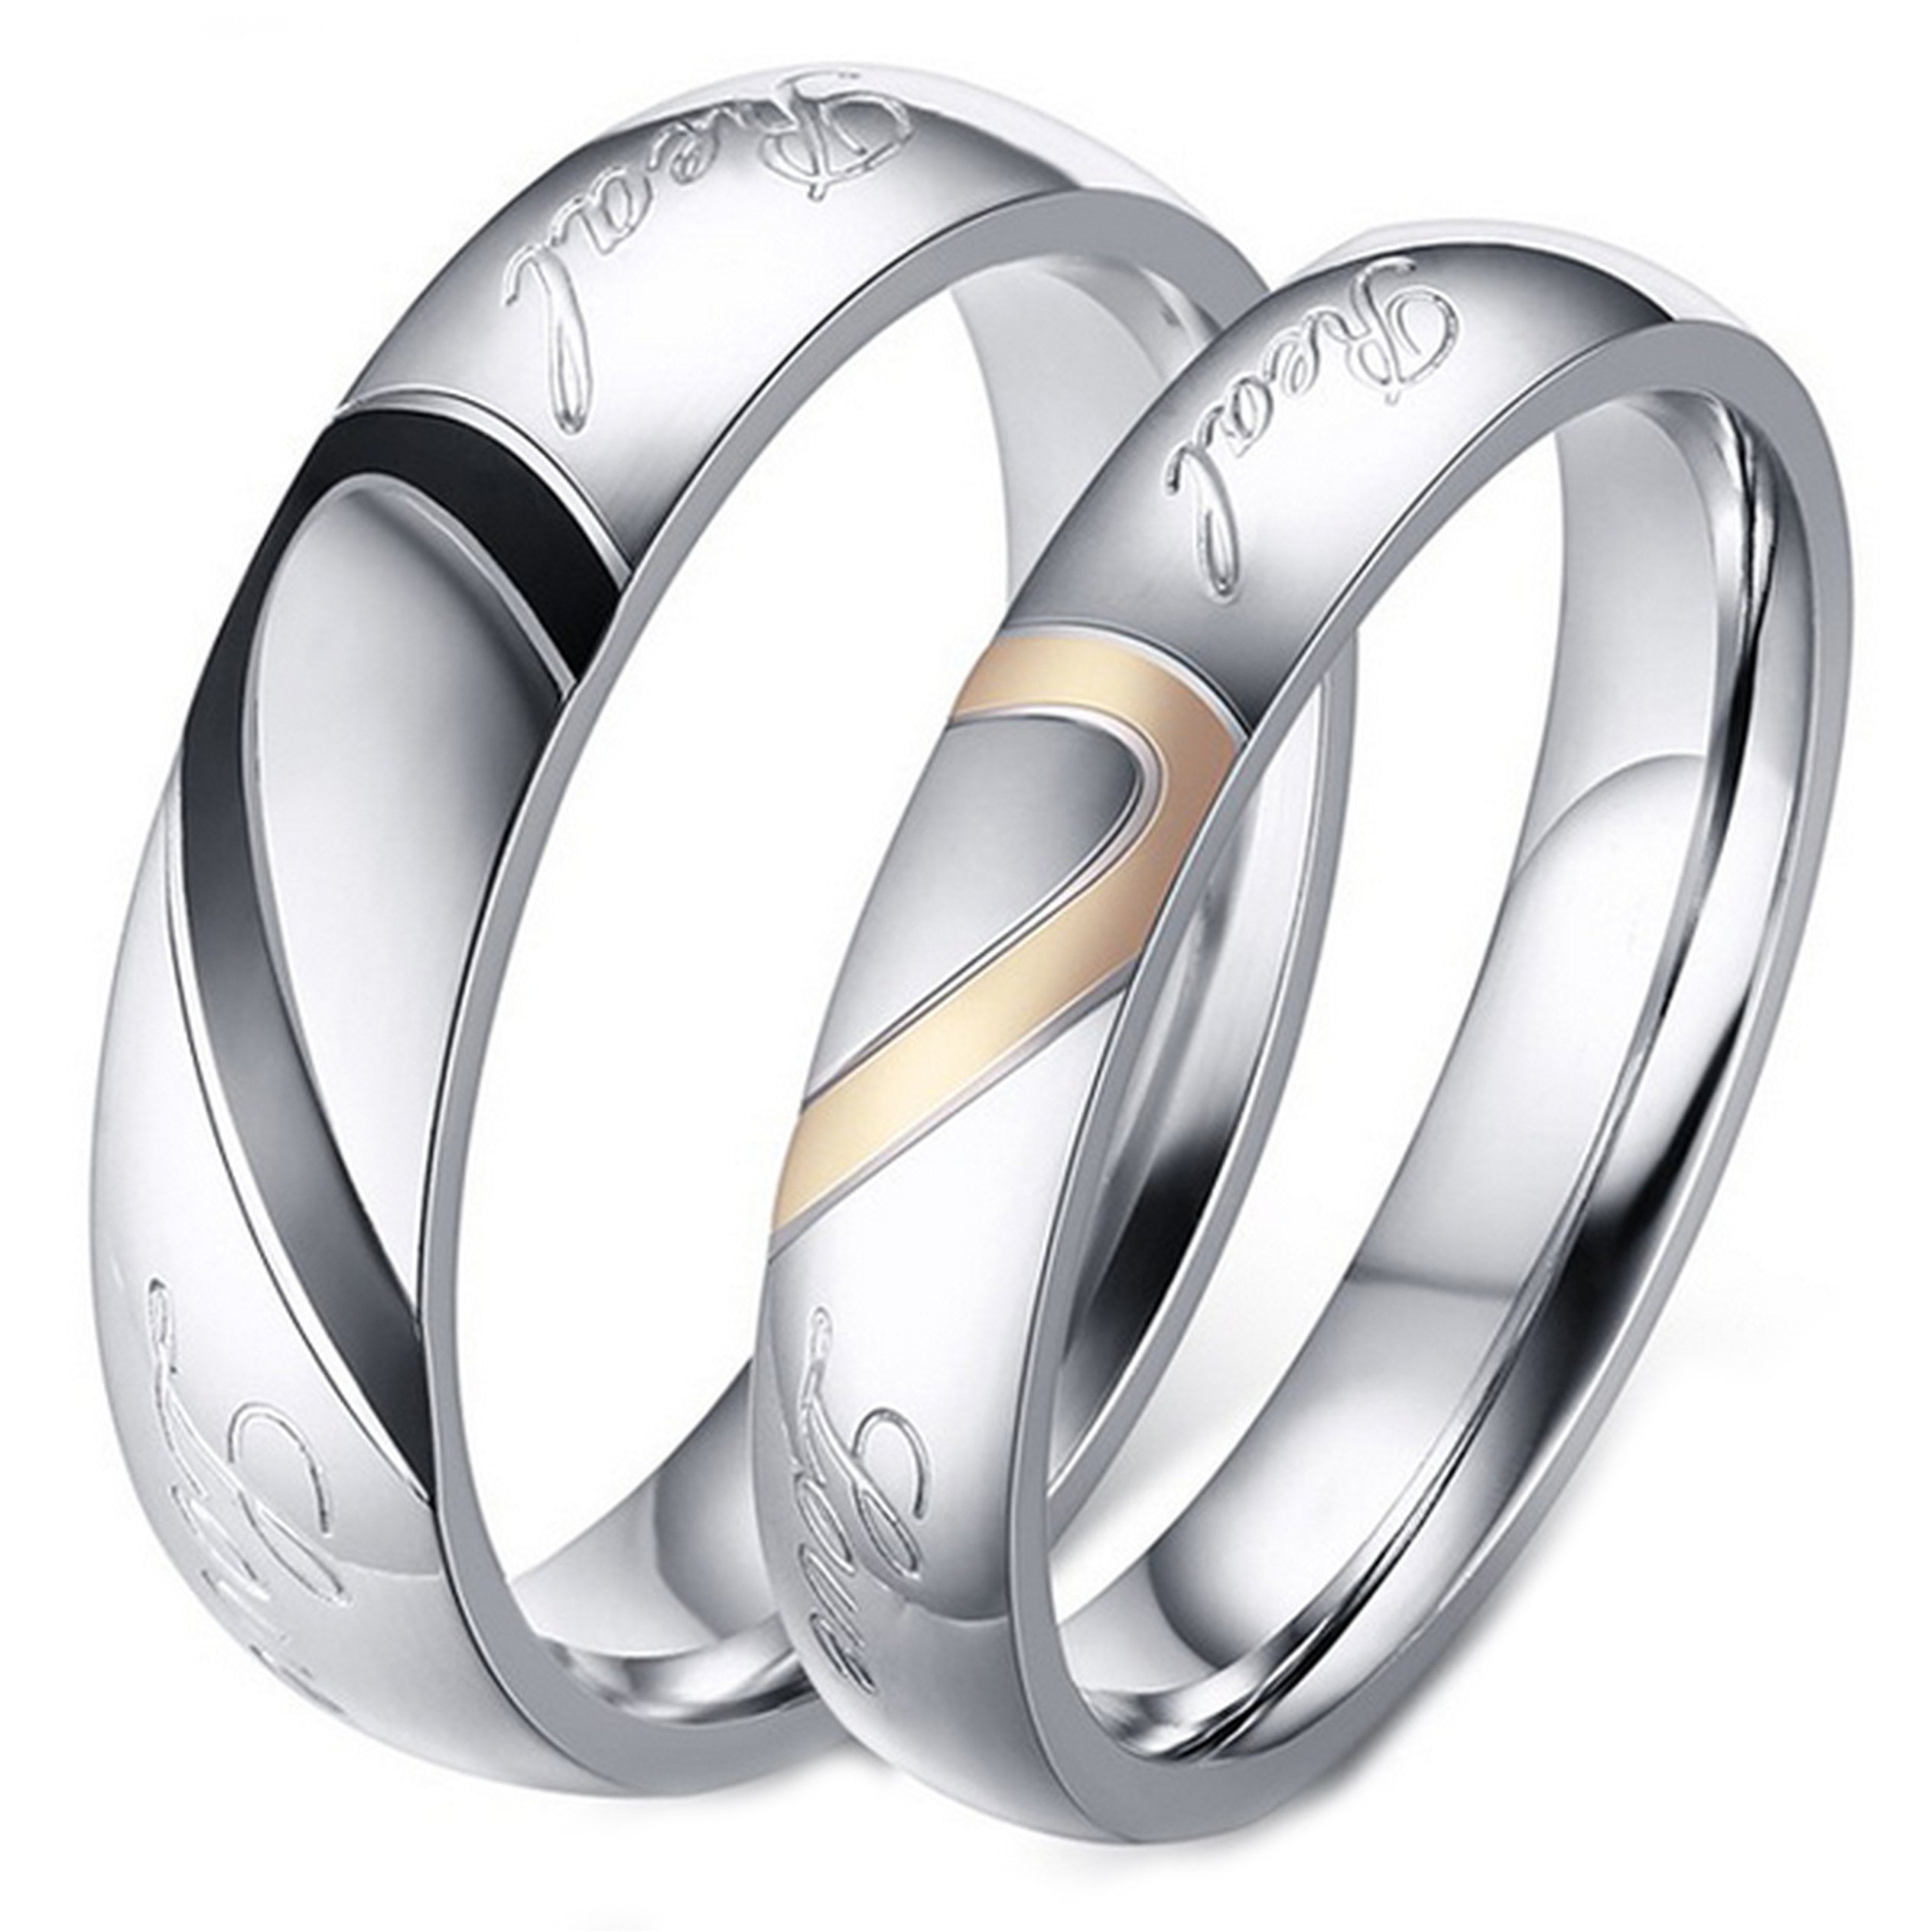 Matching Couple Ring Heart Rings For Women Men Silver Rings For Lovers Couple Rings His and Her Promise Rings Engraved Couple Name Ring